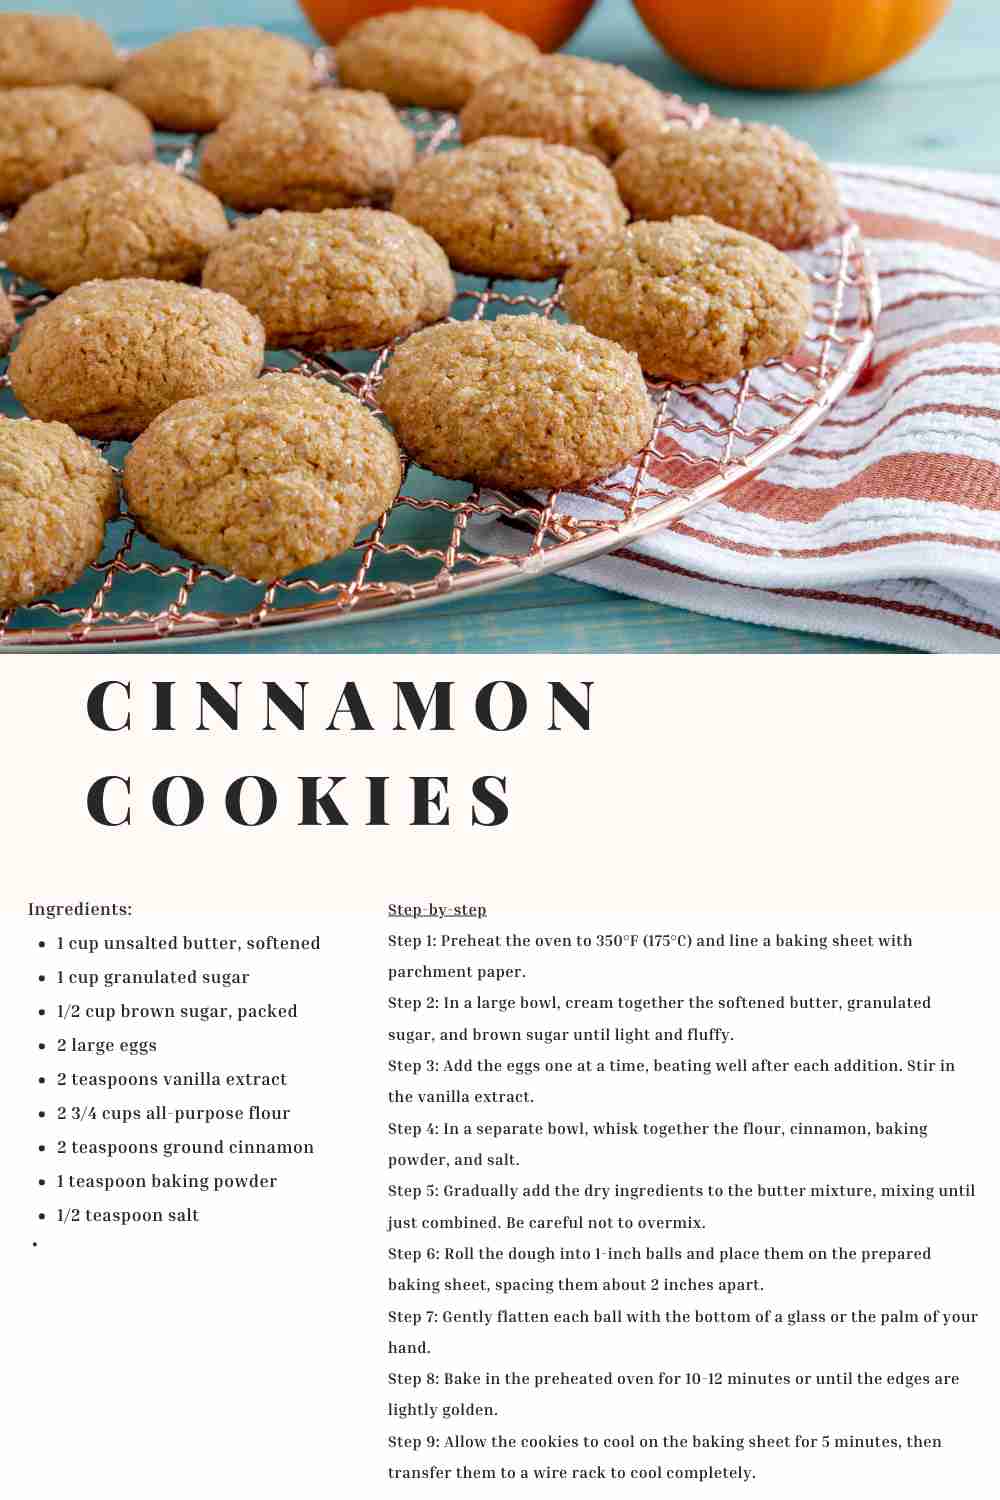 Recipe Card for Cinnamon Cookies